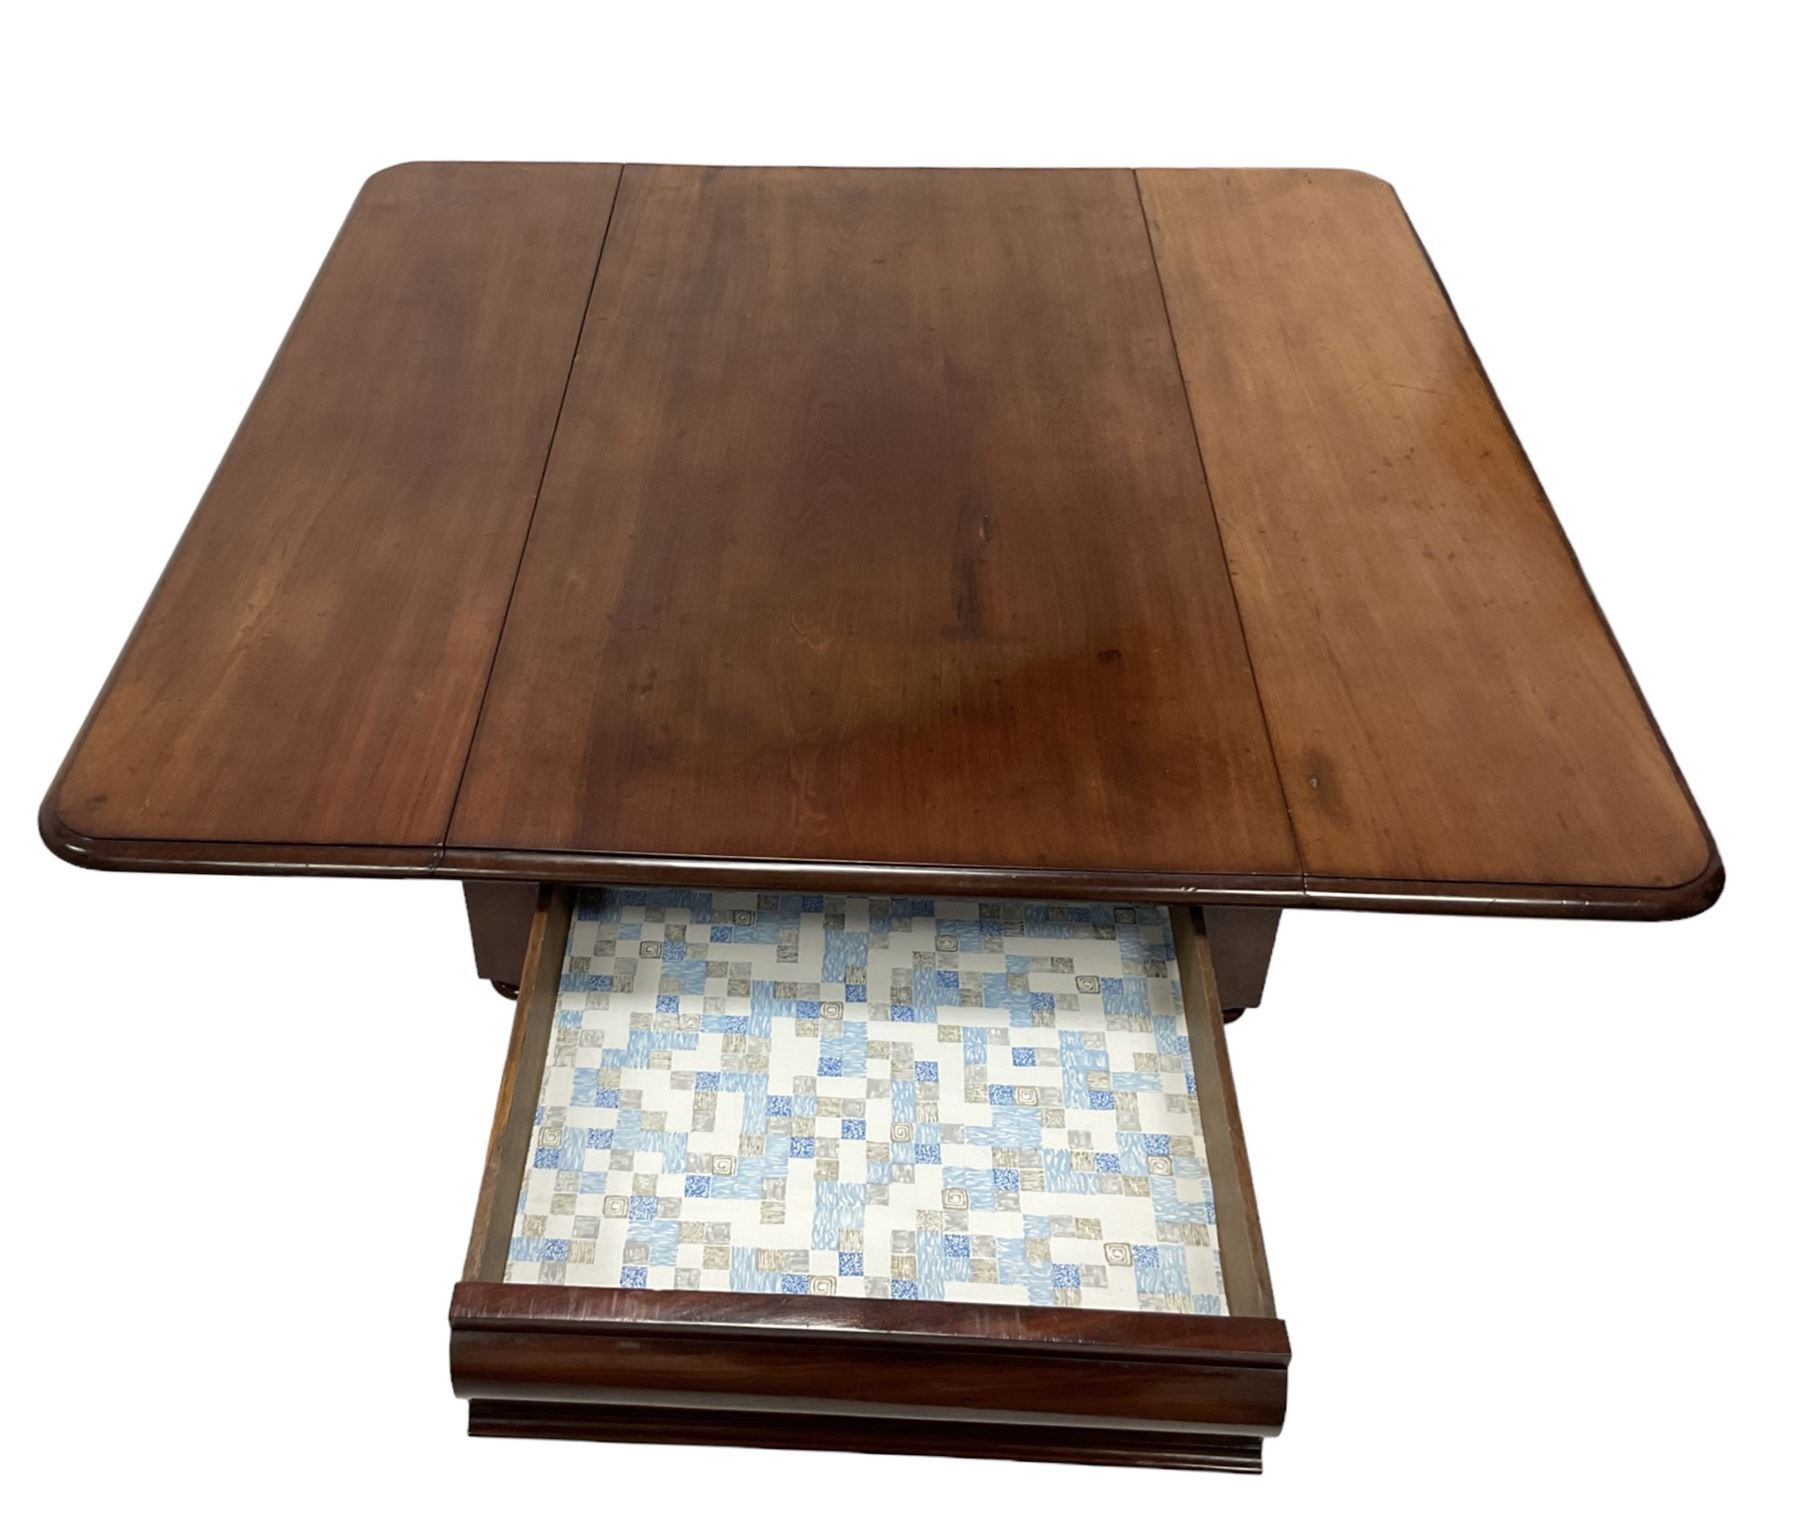 19th century mahogany rectangular drop-leaf table - Image 6 of 11